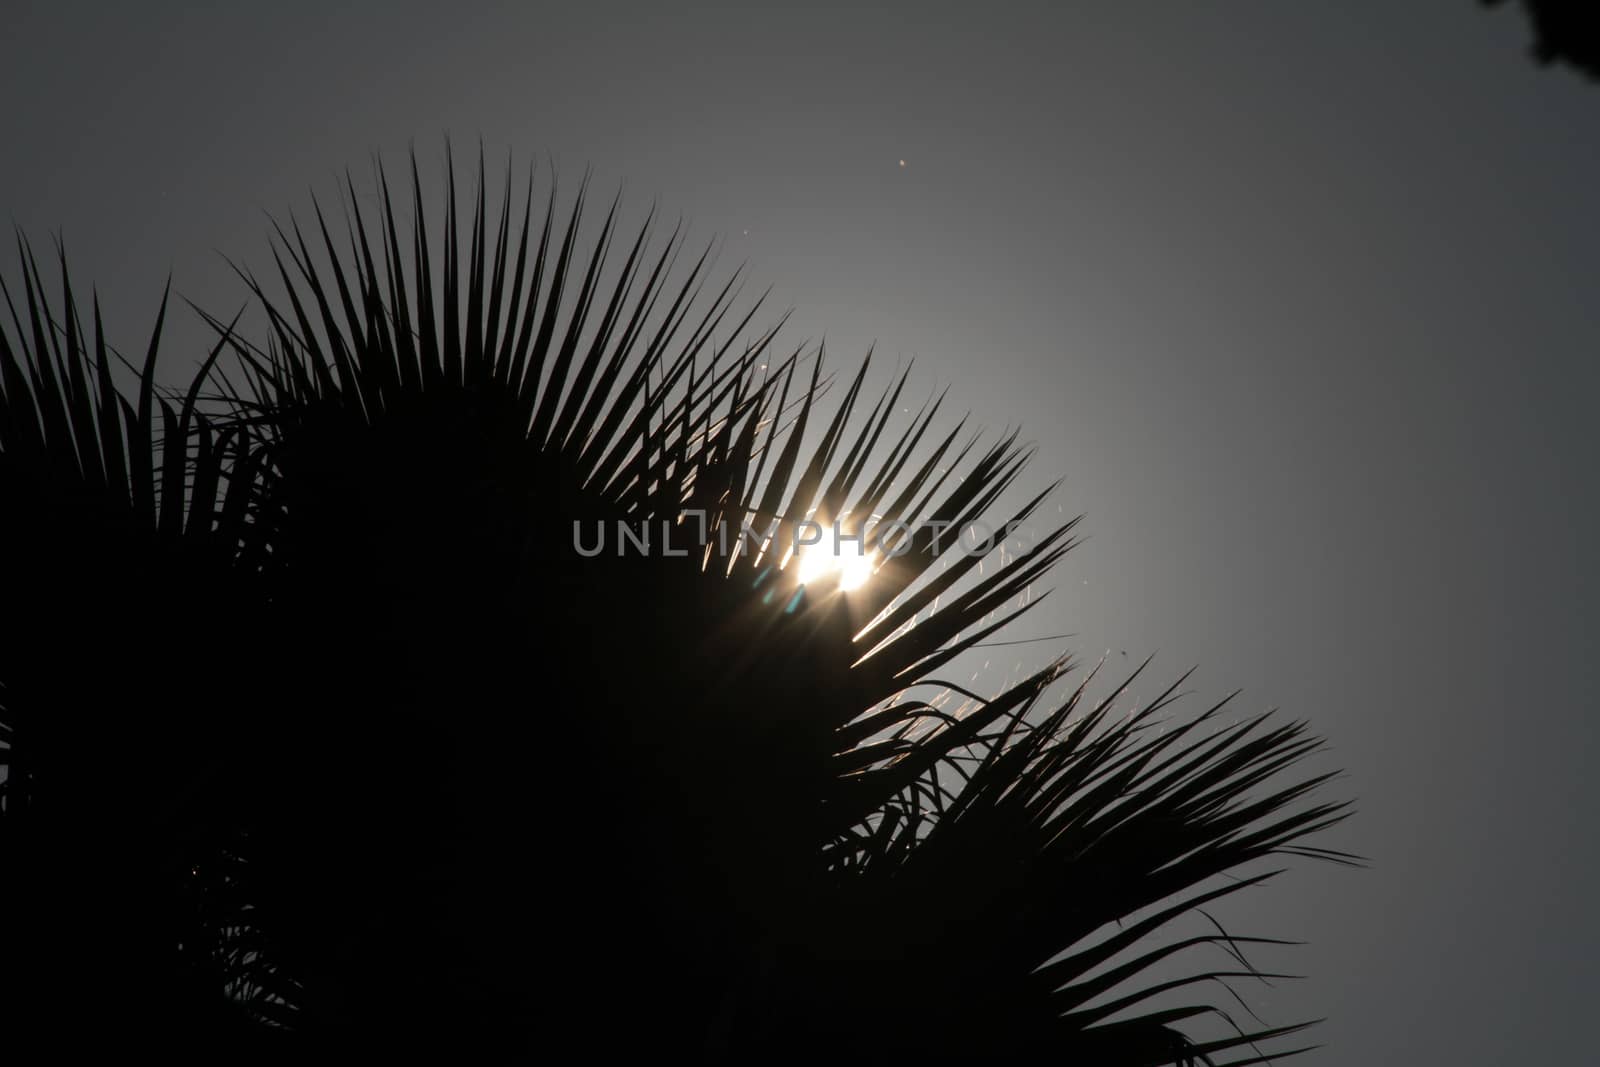 palm tree sun ray light